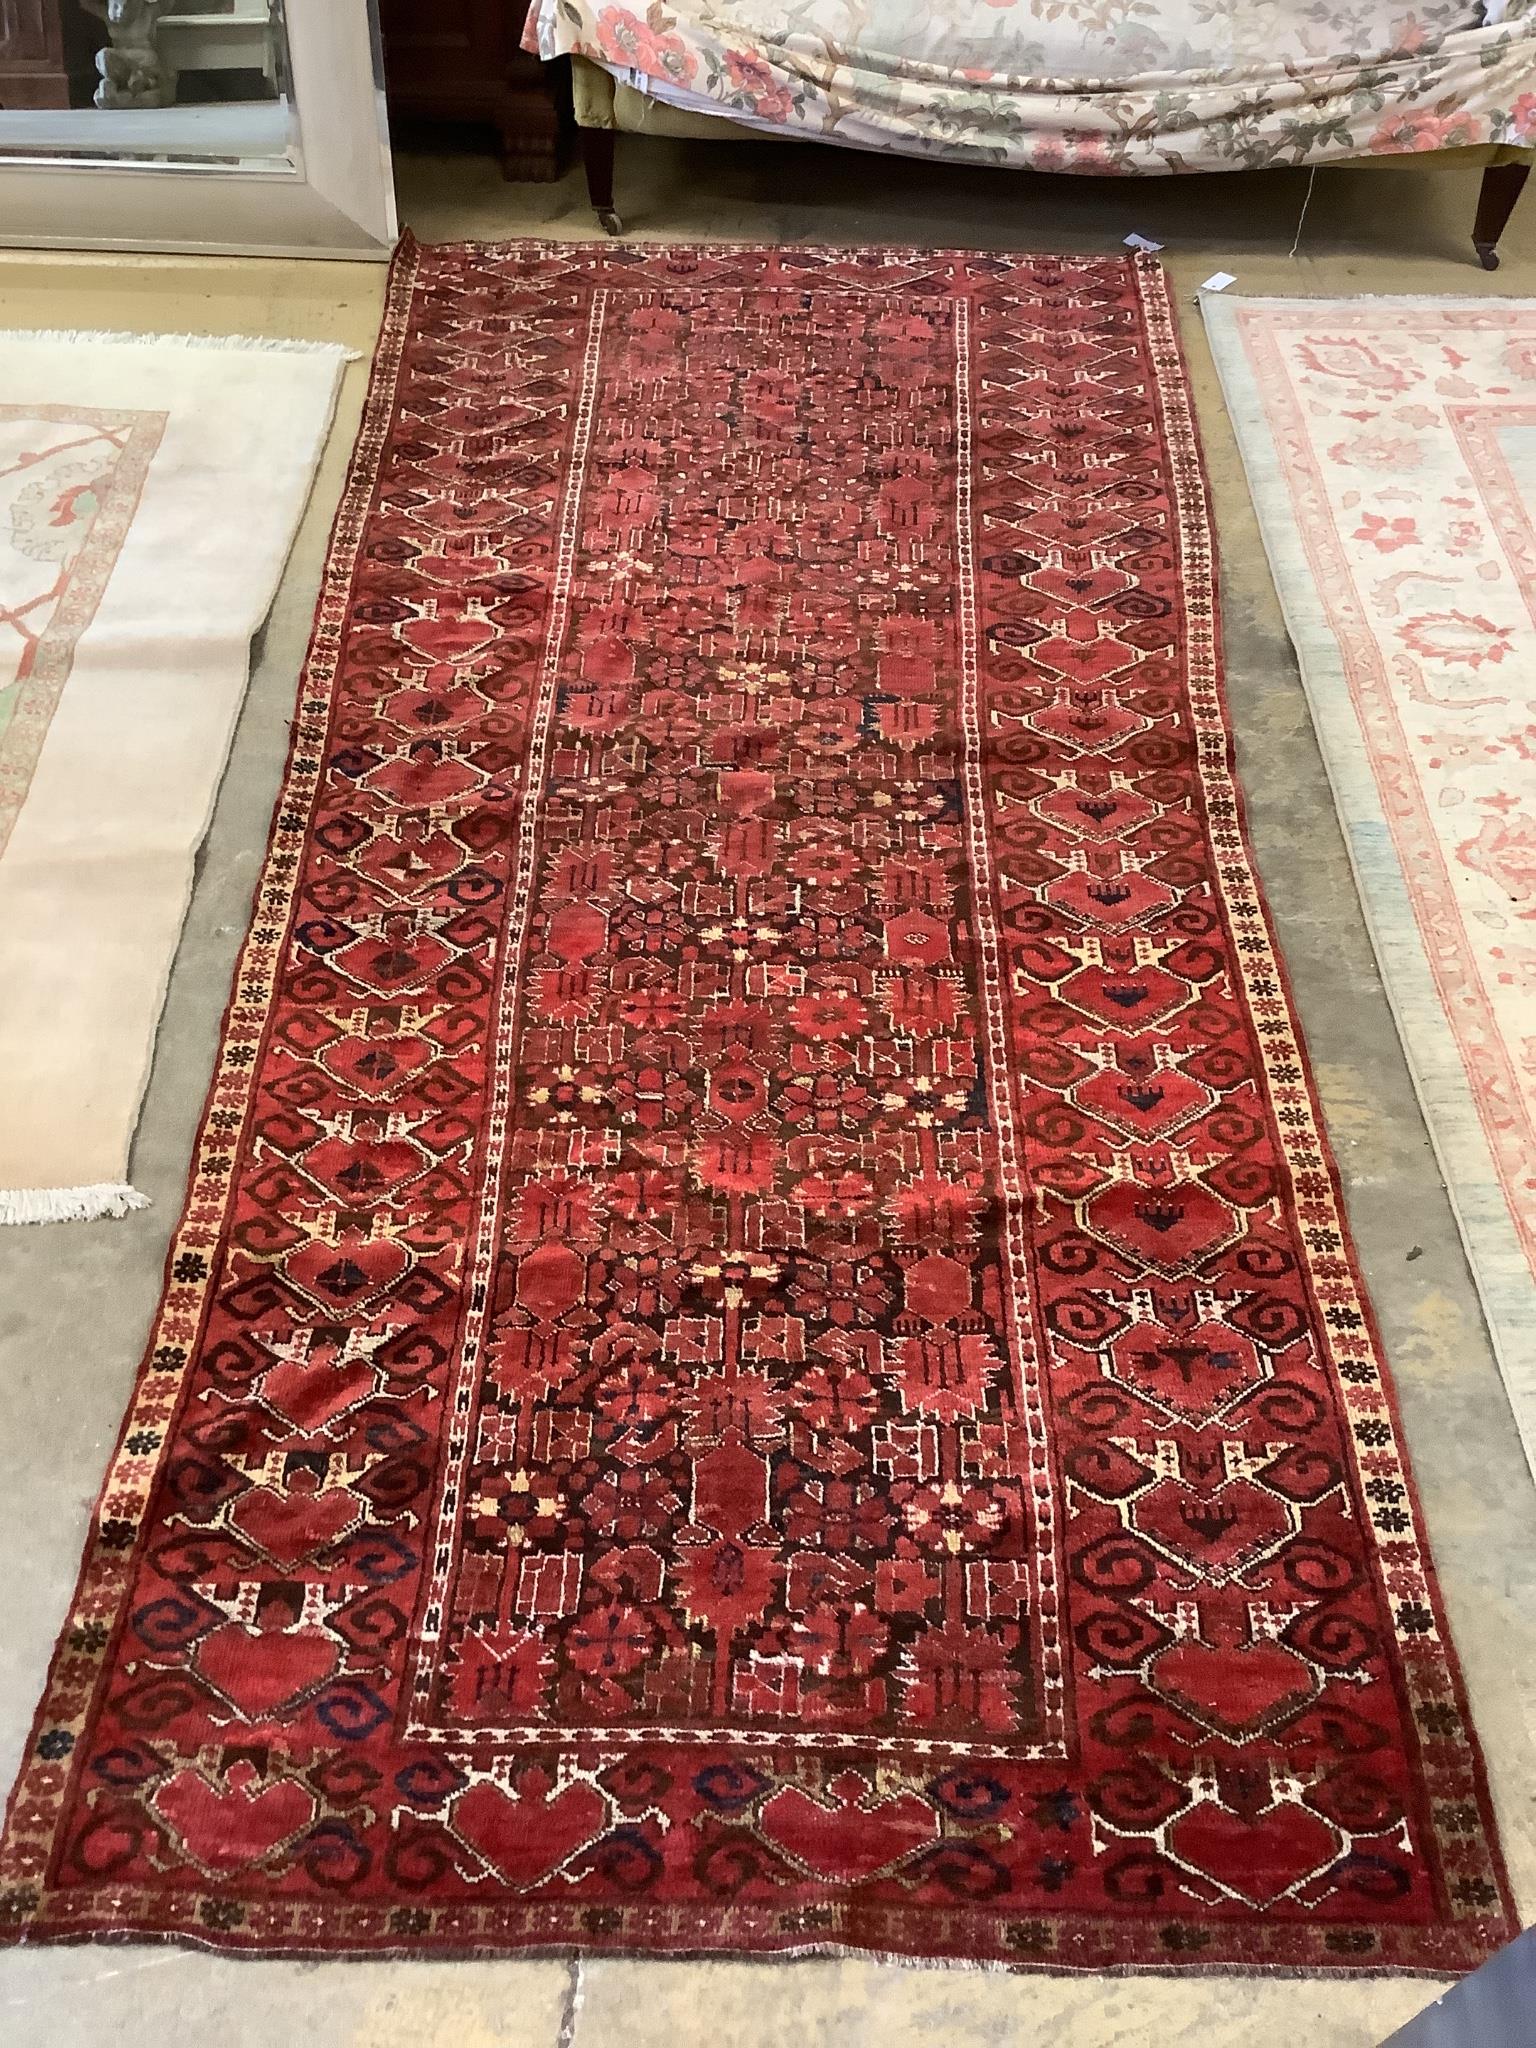 An Afghan red ground rug, 290 x 140cm